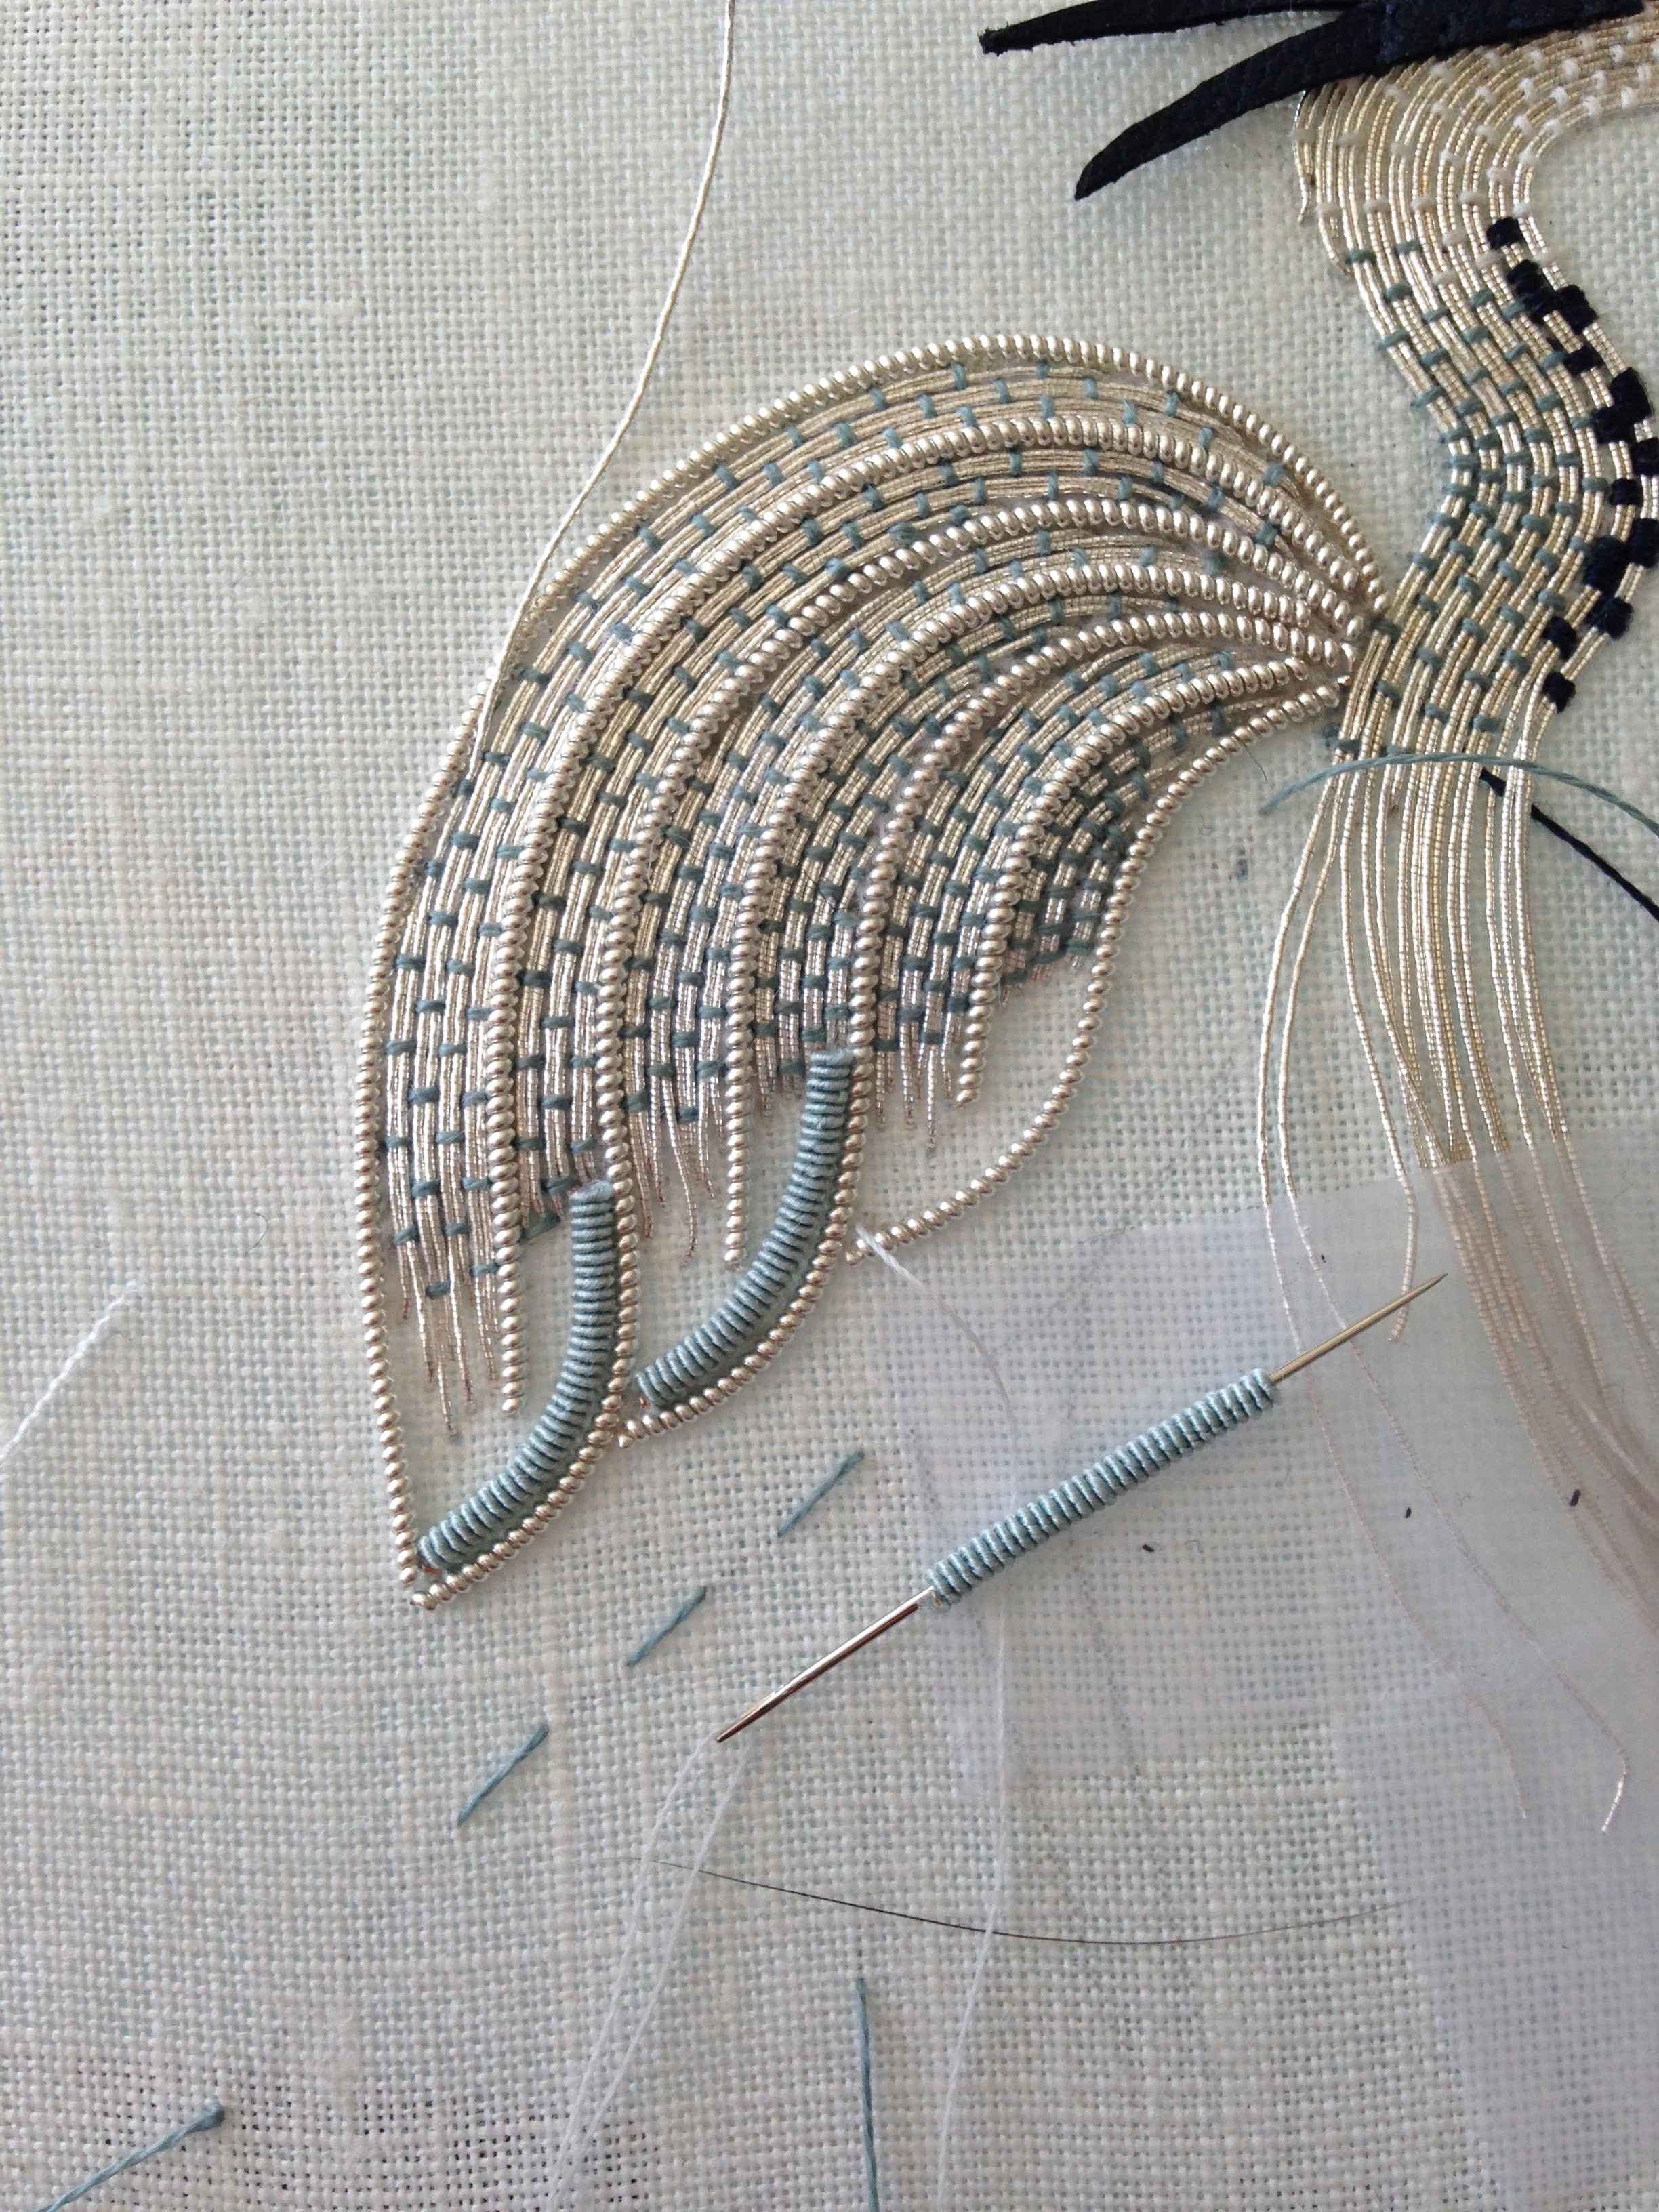 Metal thread Embroidery Heron kit – Becky Hogg